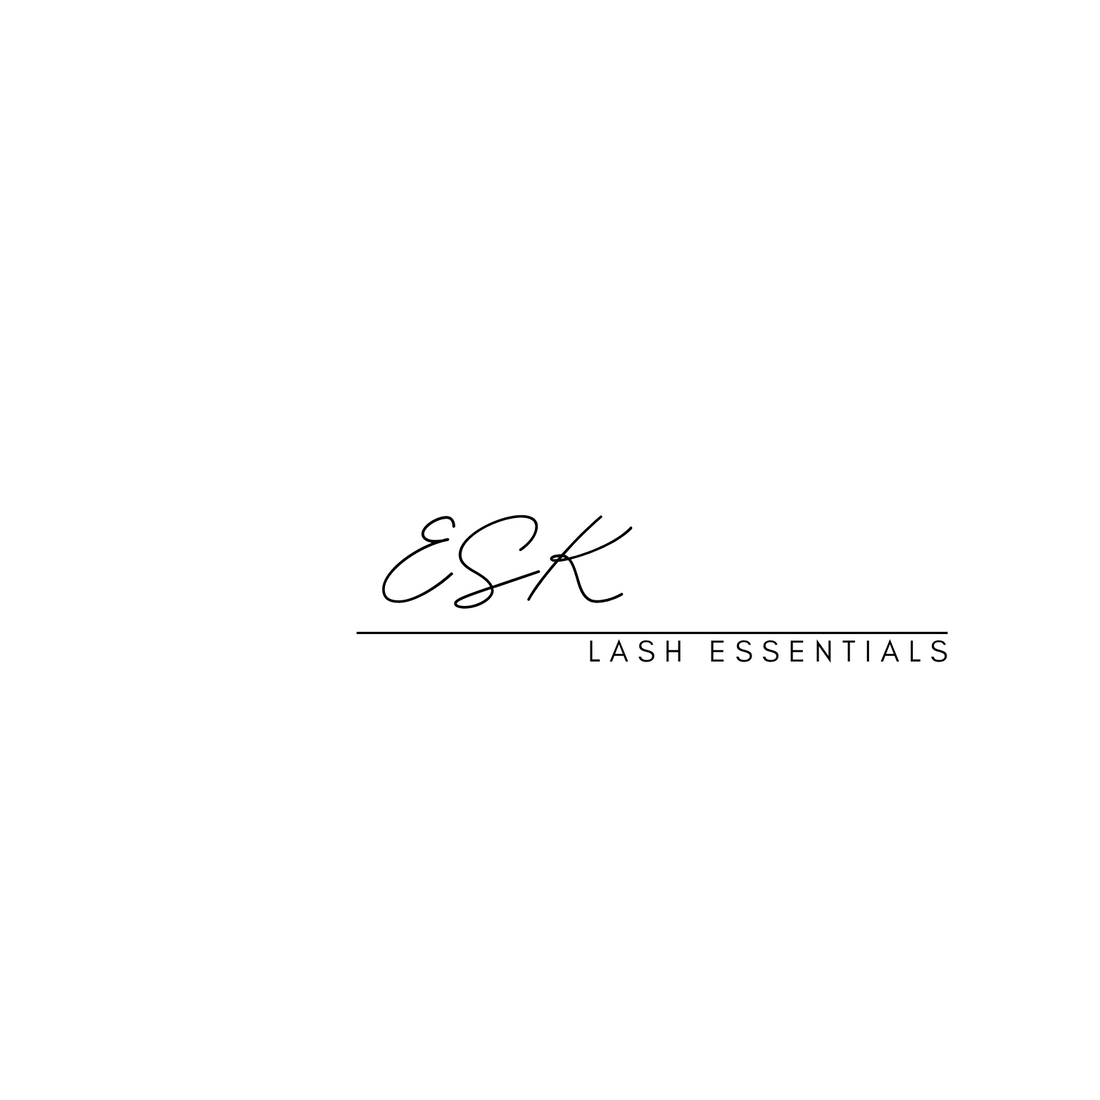 The fabulous 12mm ESK eyelash extension essentials lashes! | ESK eyelash extension products and supplies